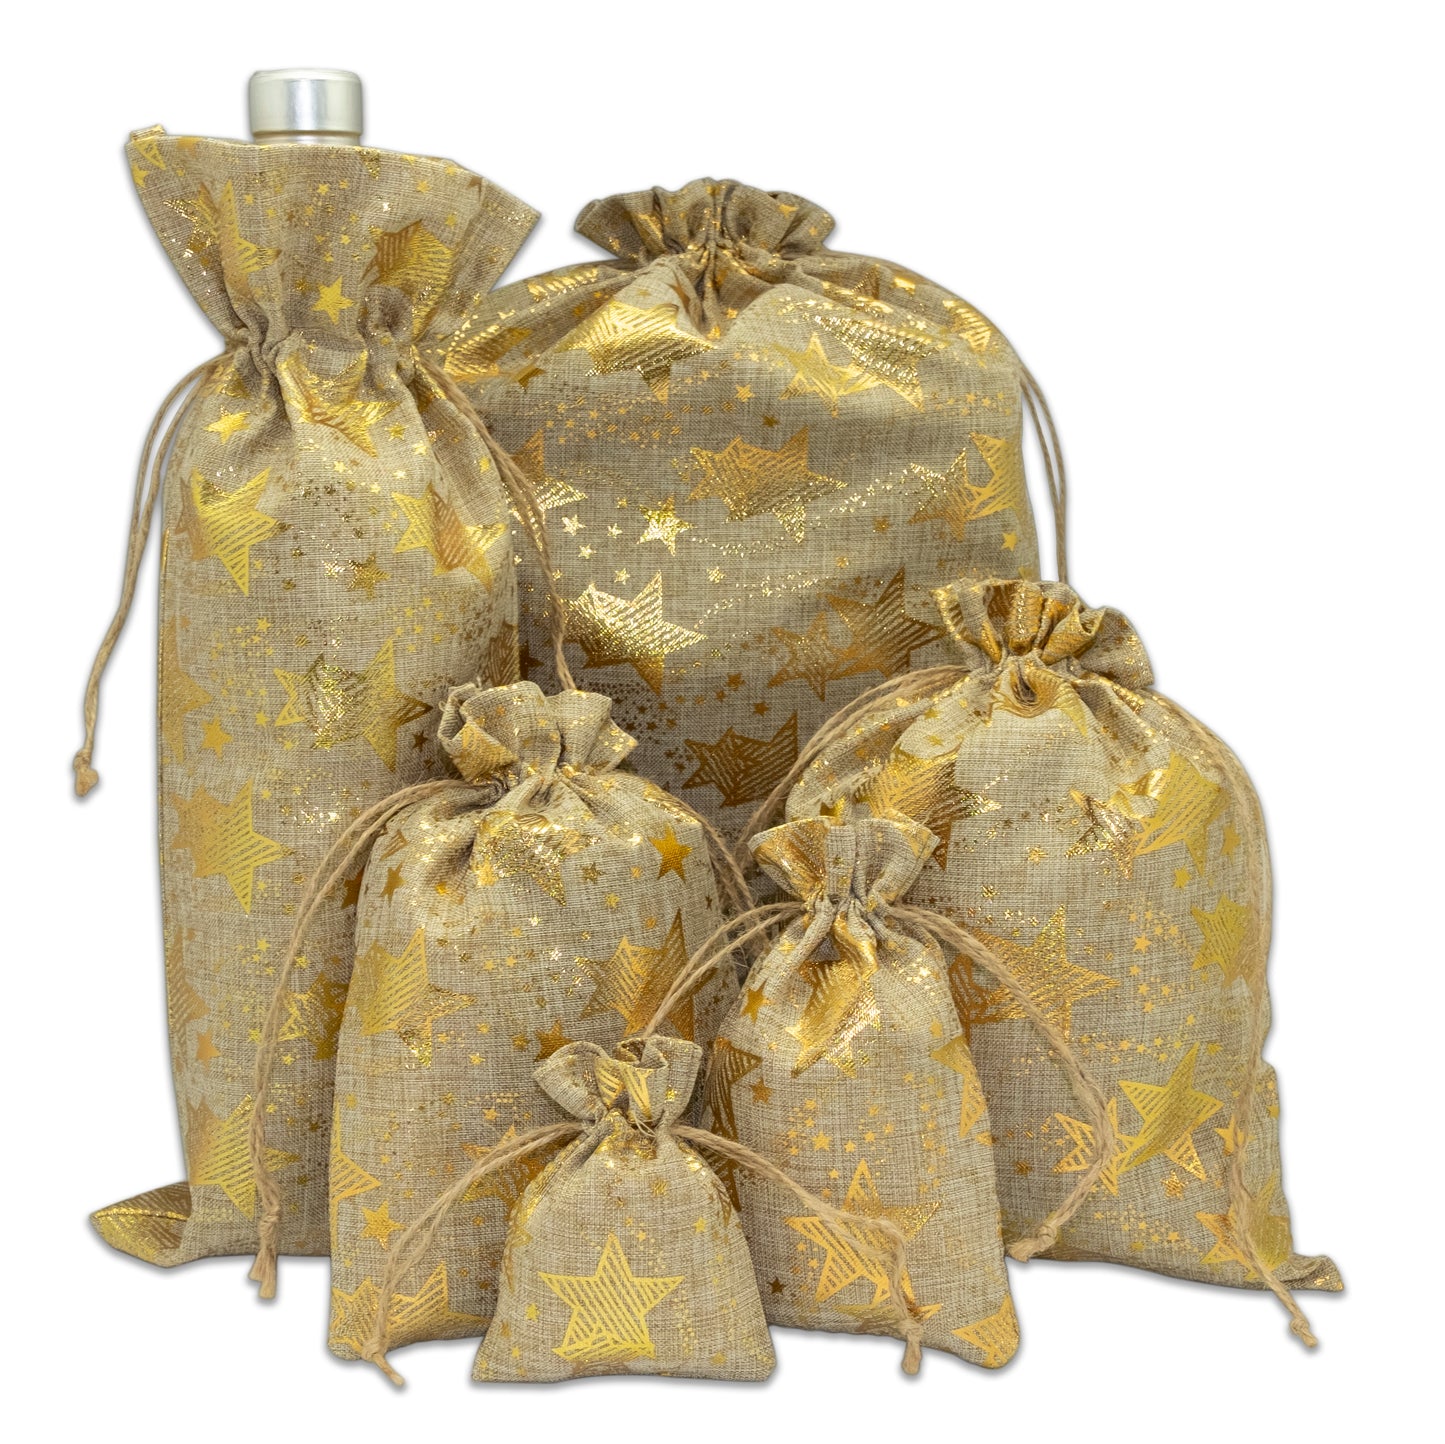 6" x 14" Jute Burlap Gold Star Wine Bottle Drawstring Gift Bags